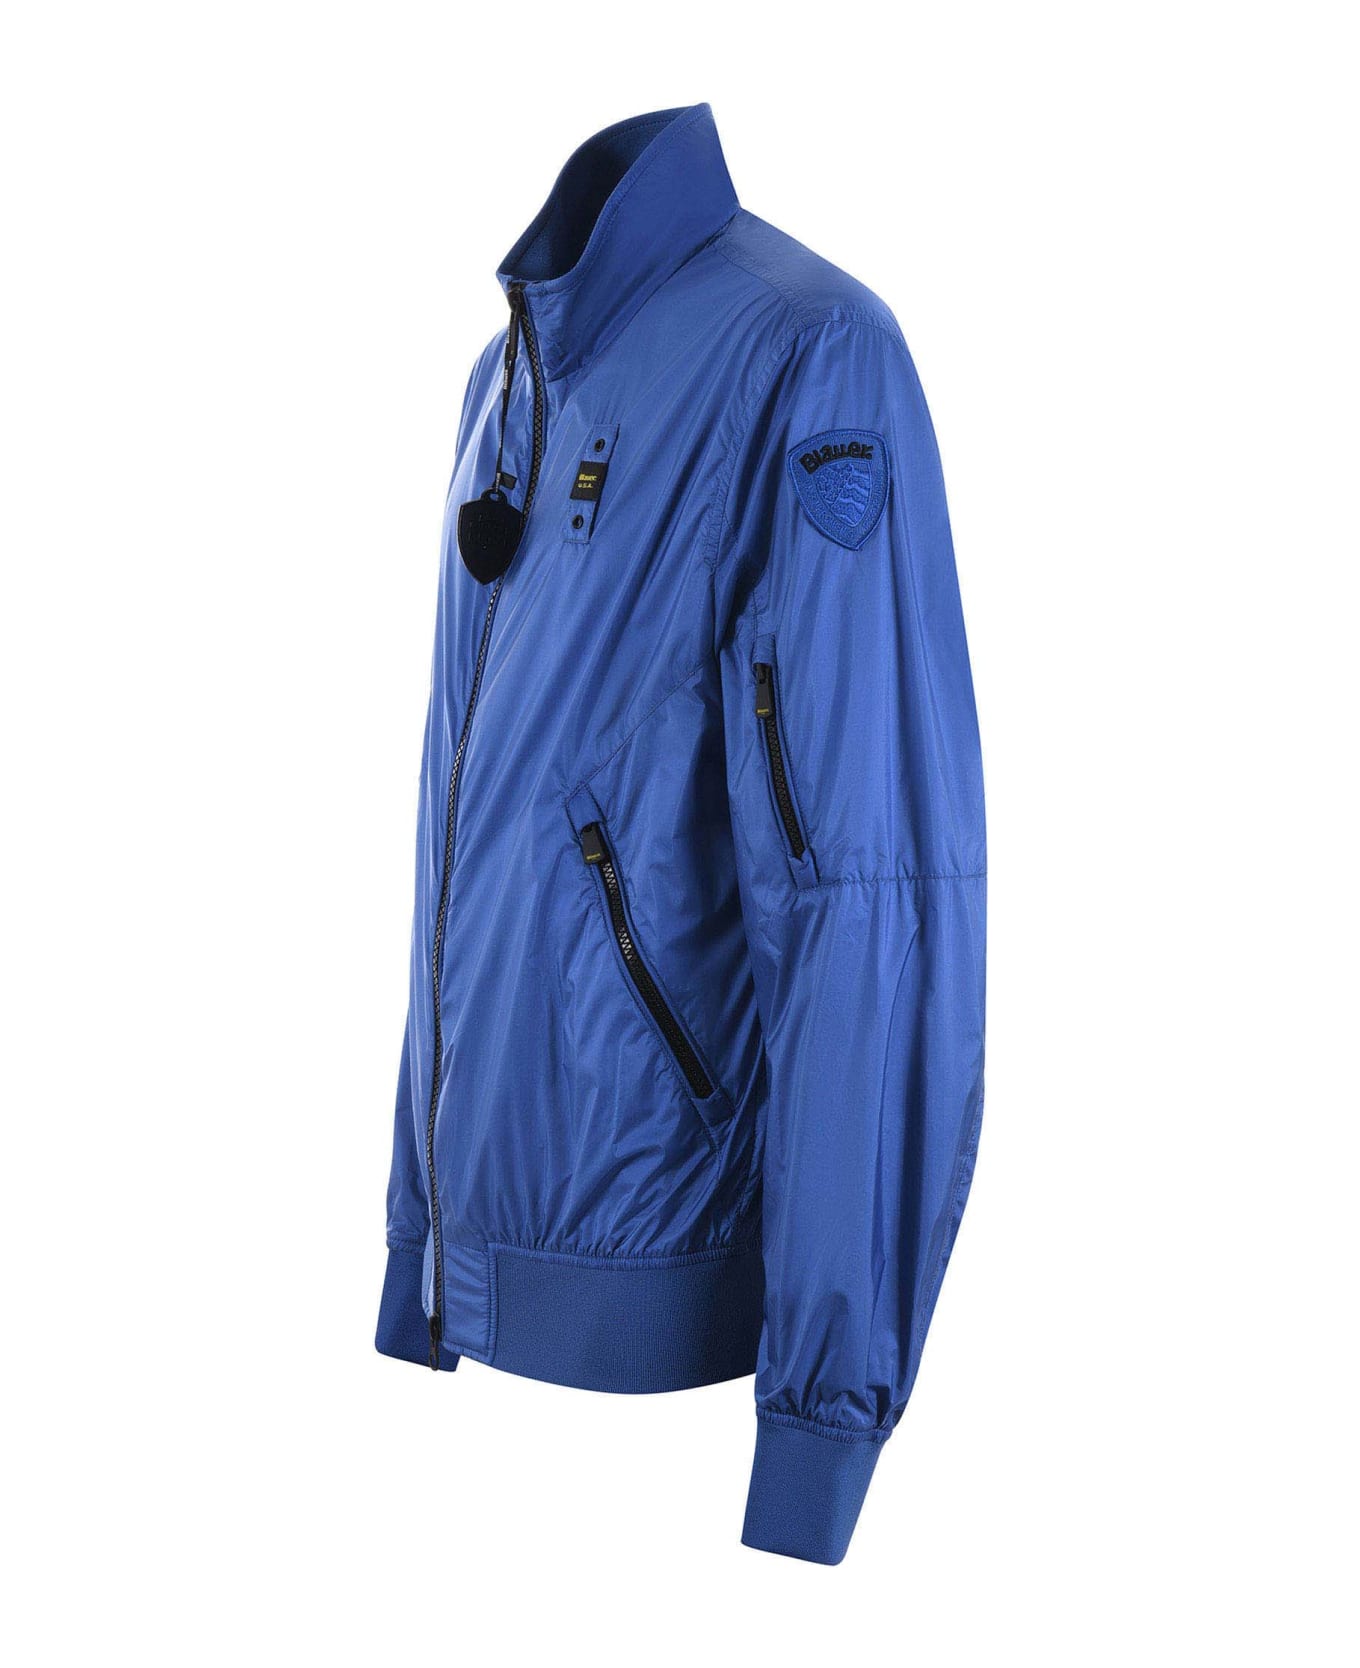 Blauer Jacket - Blu cobalto ジャケット